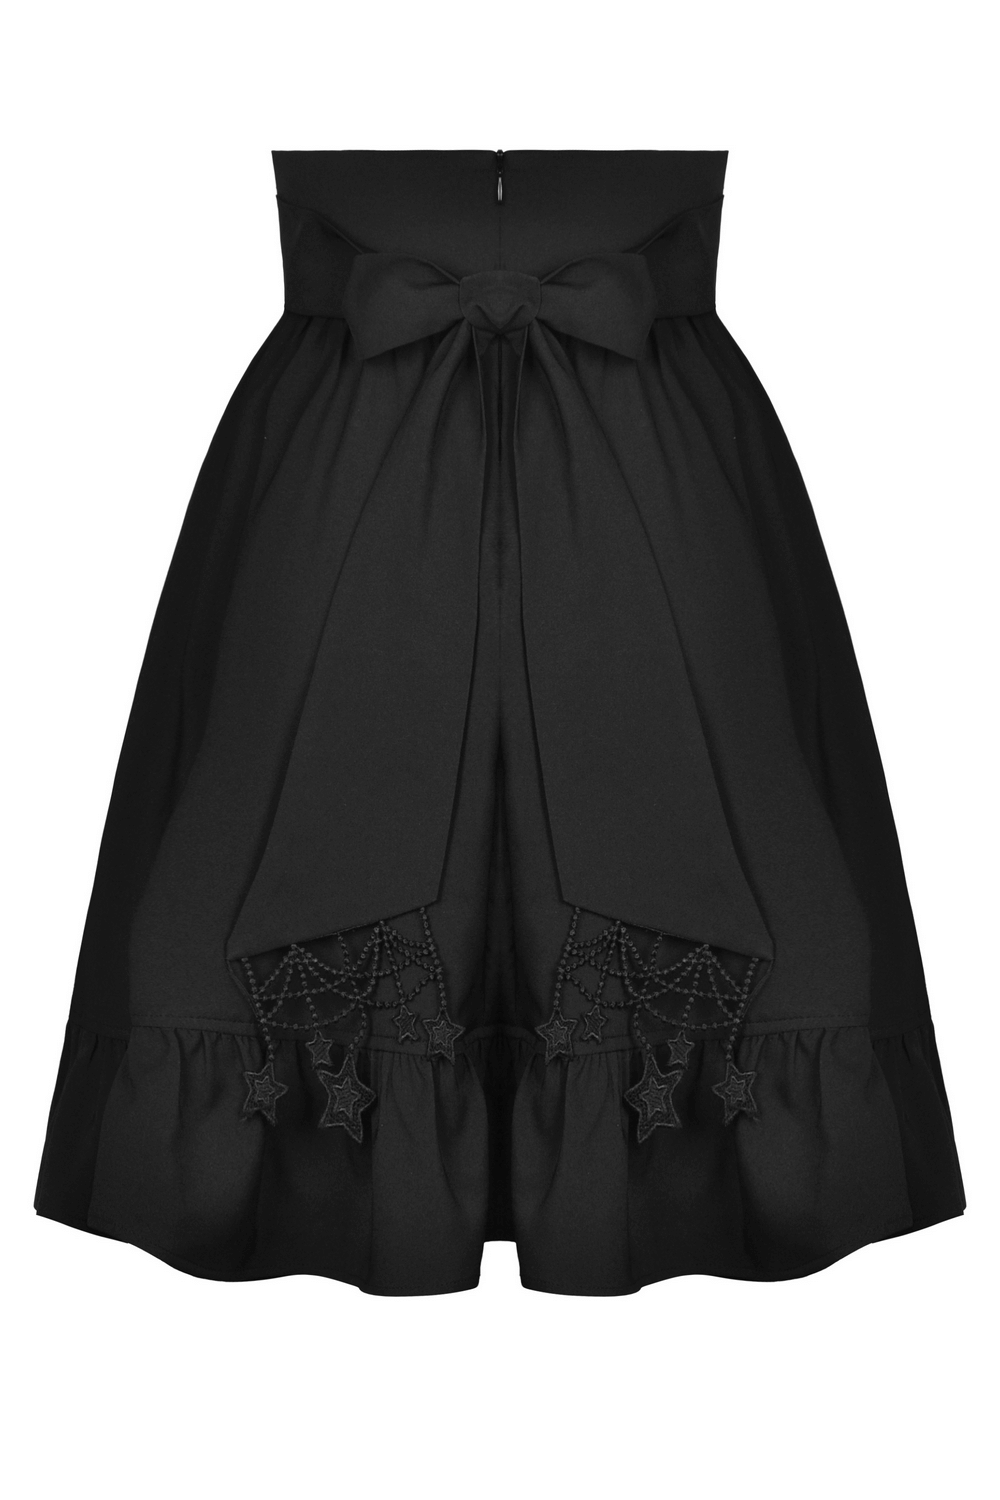 Elegant Lace-Trimmed Black and White High Waist Skirt